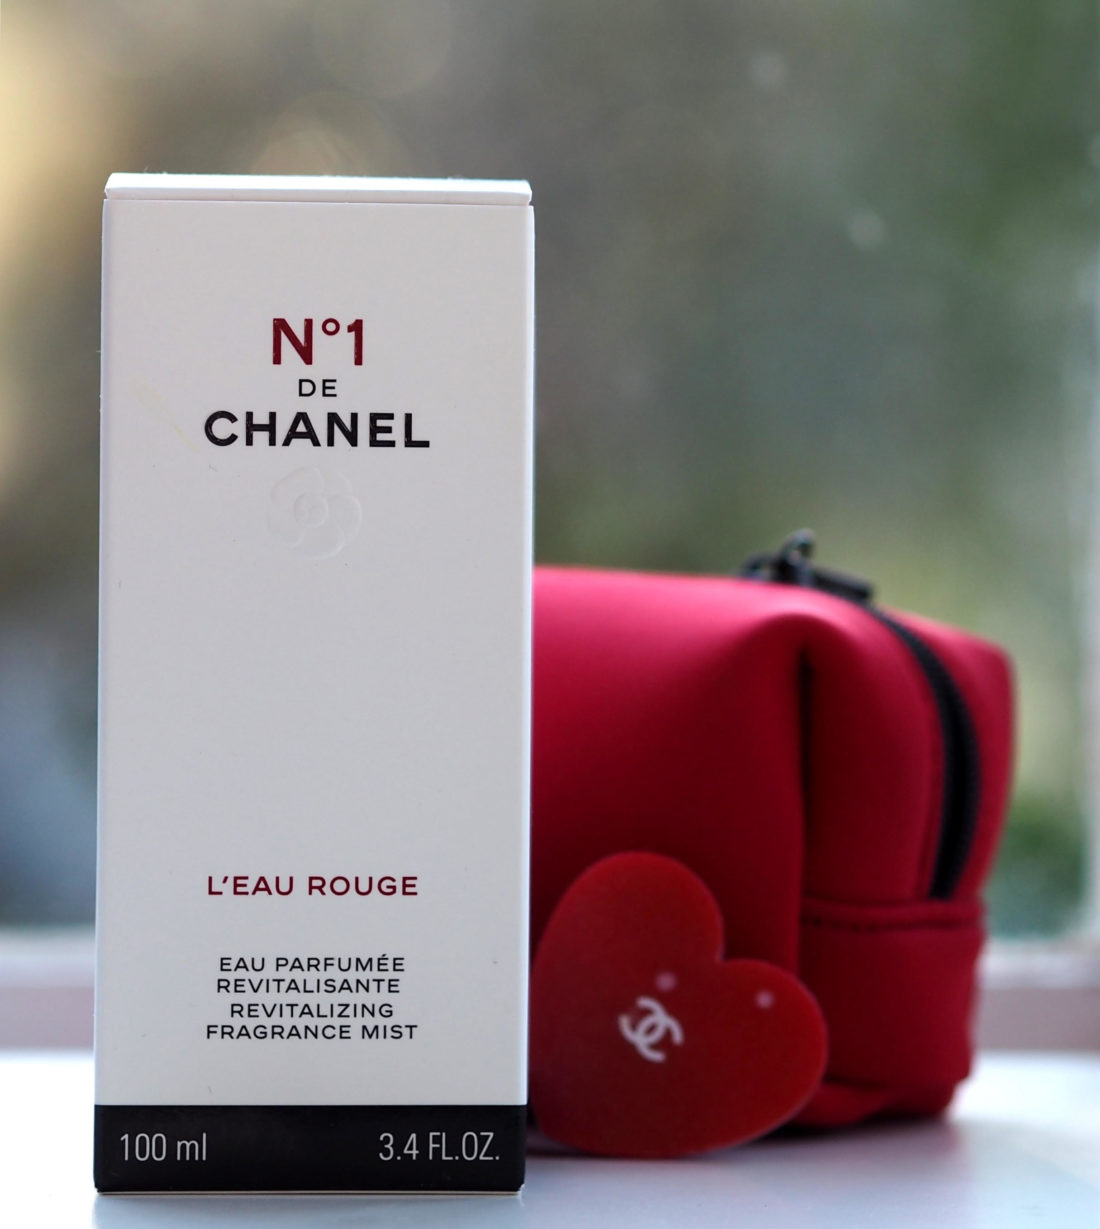 Nước Hoa Chanel No 1 L'eau Rouge - Yaatea Shop